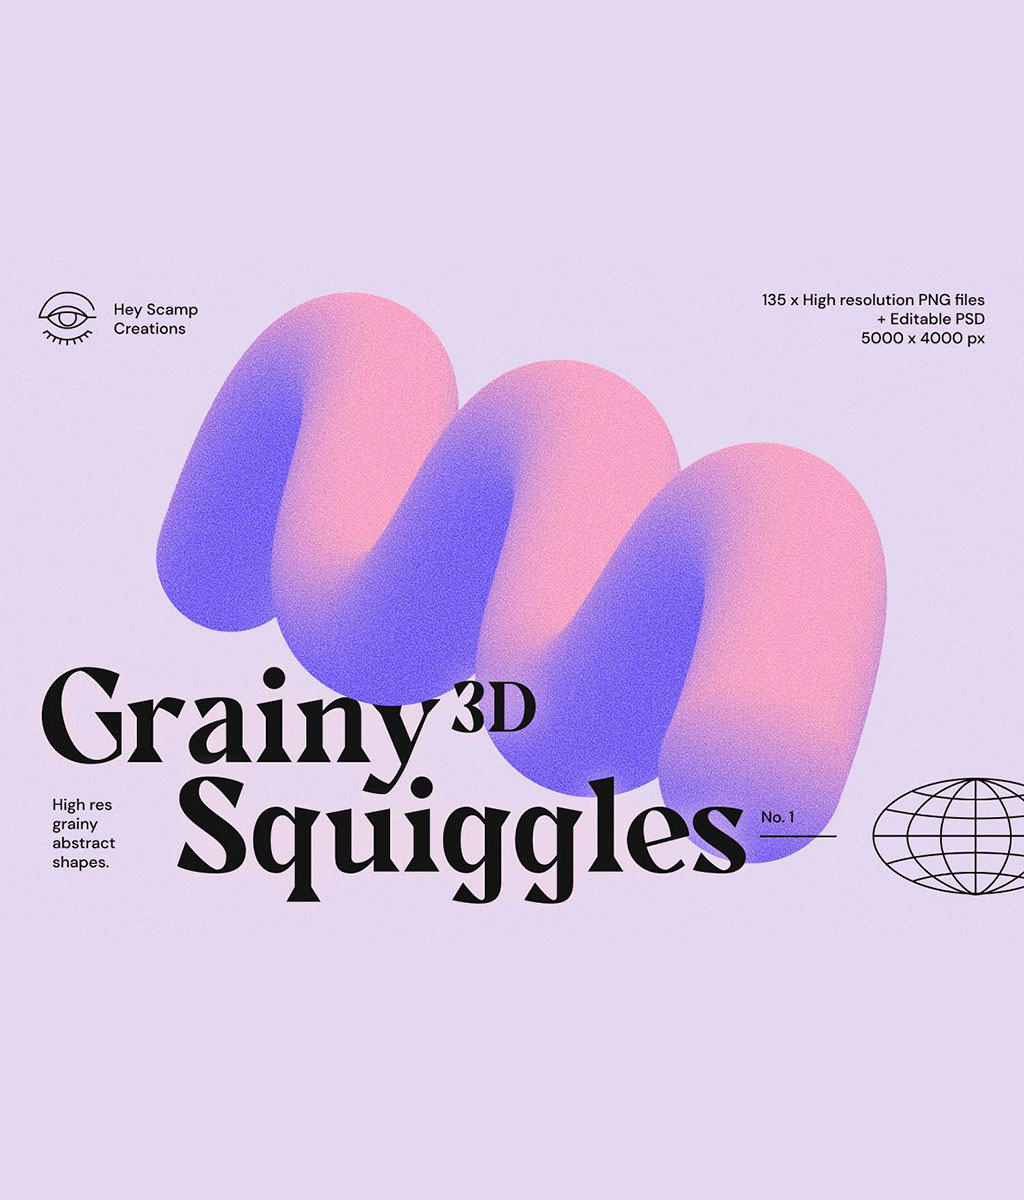 Grainy Textured 3D Squiggles